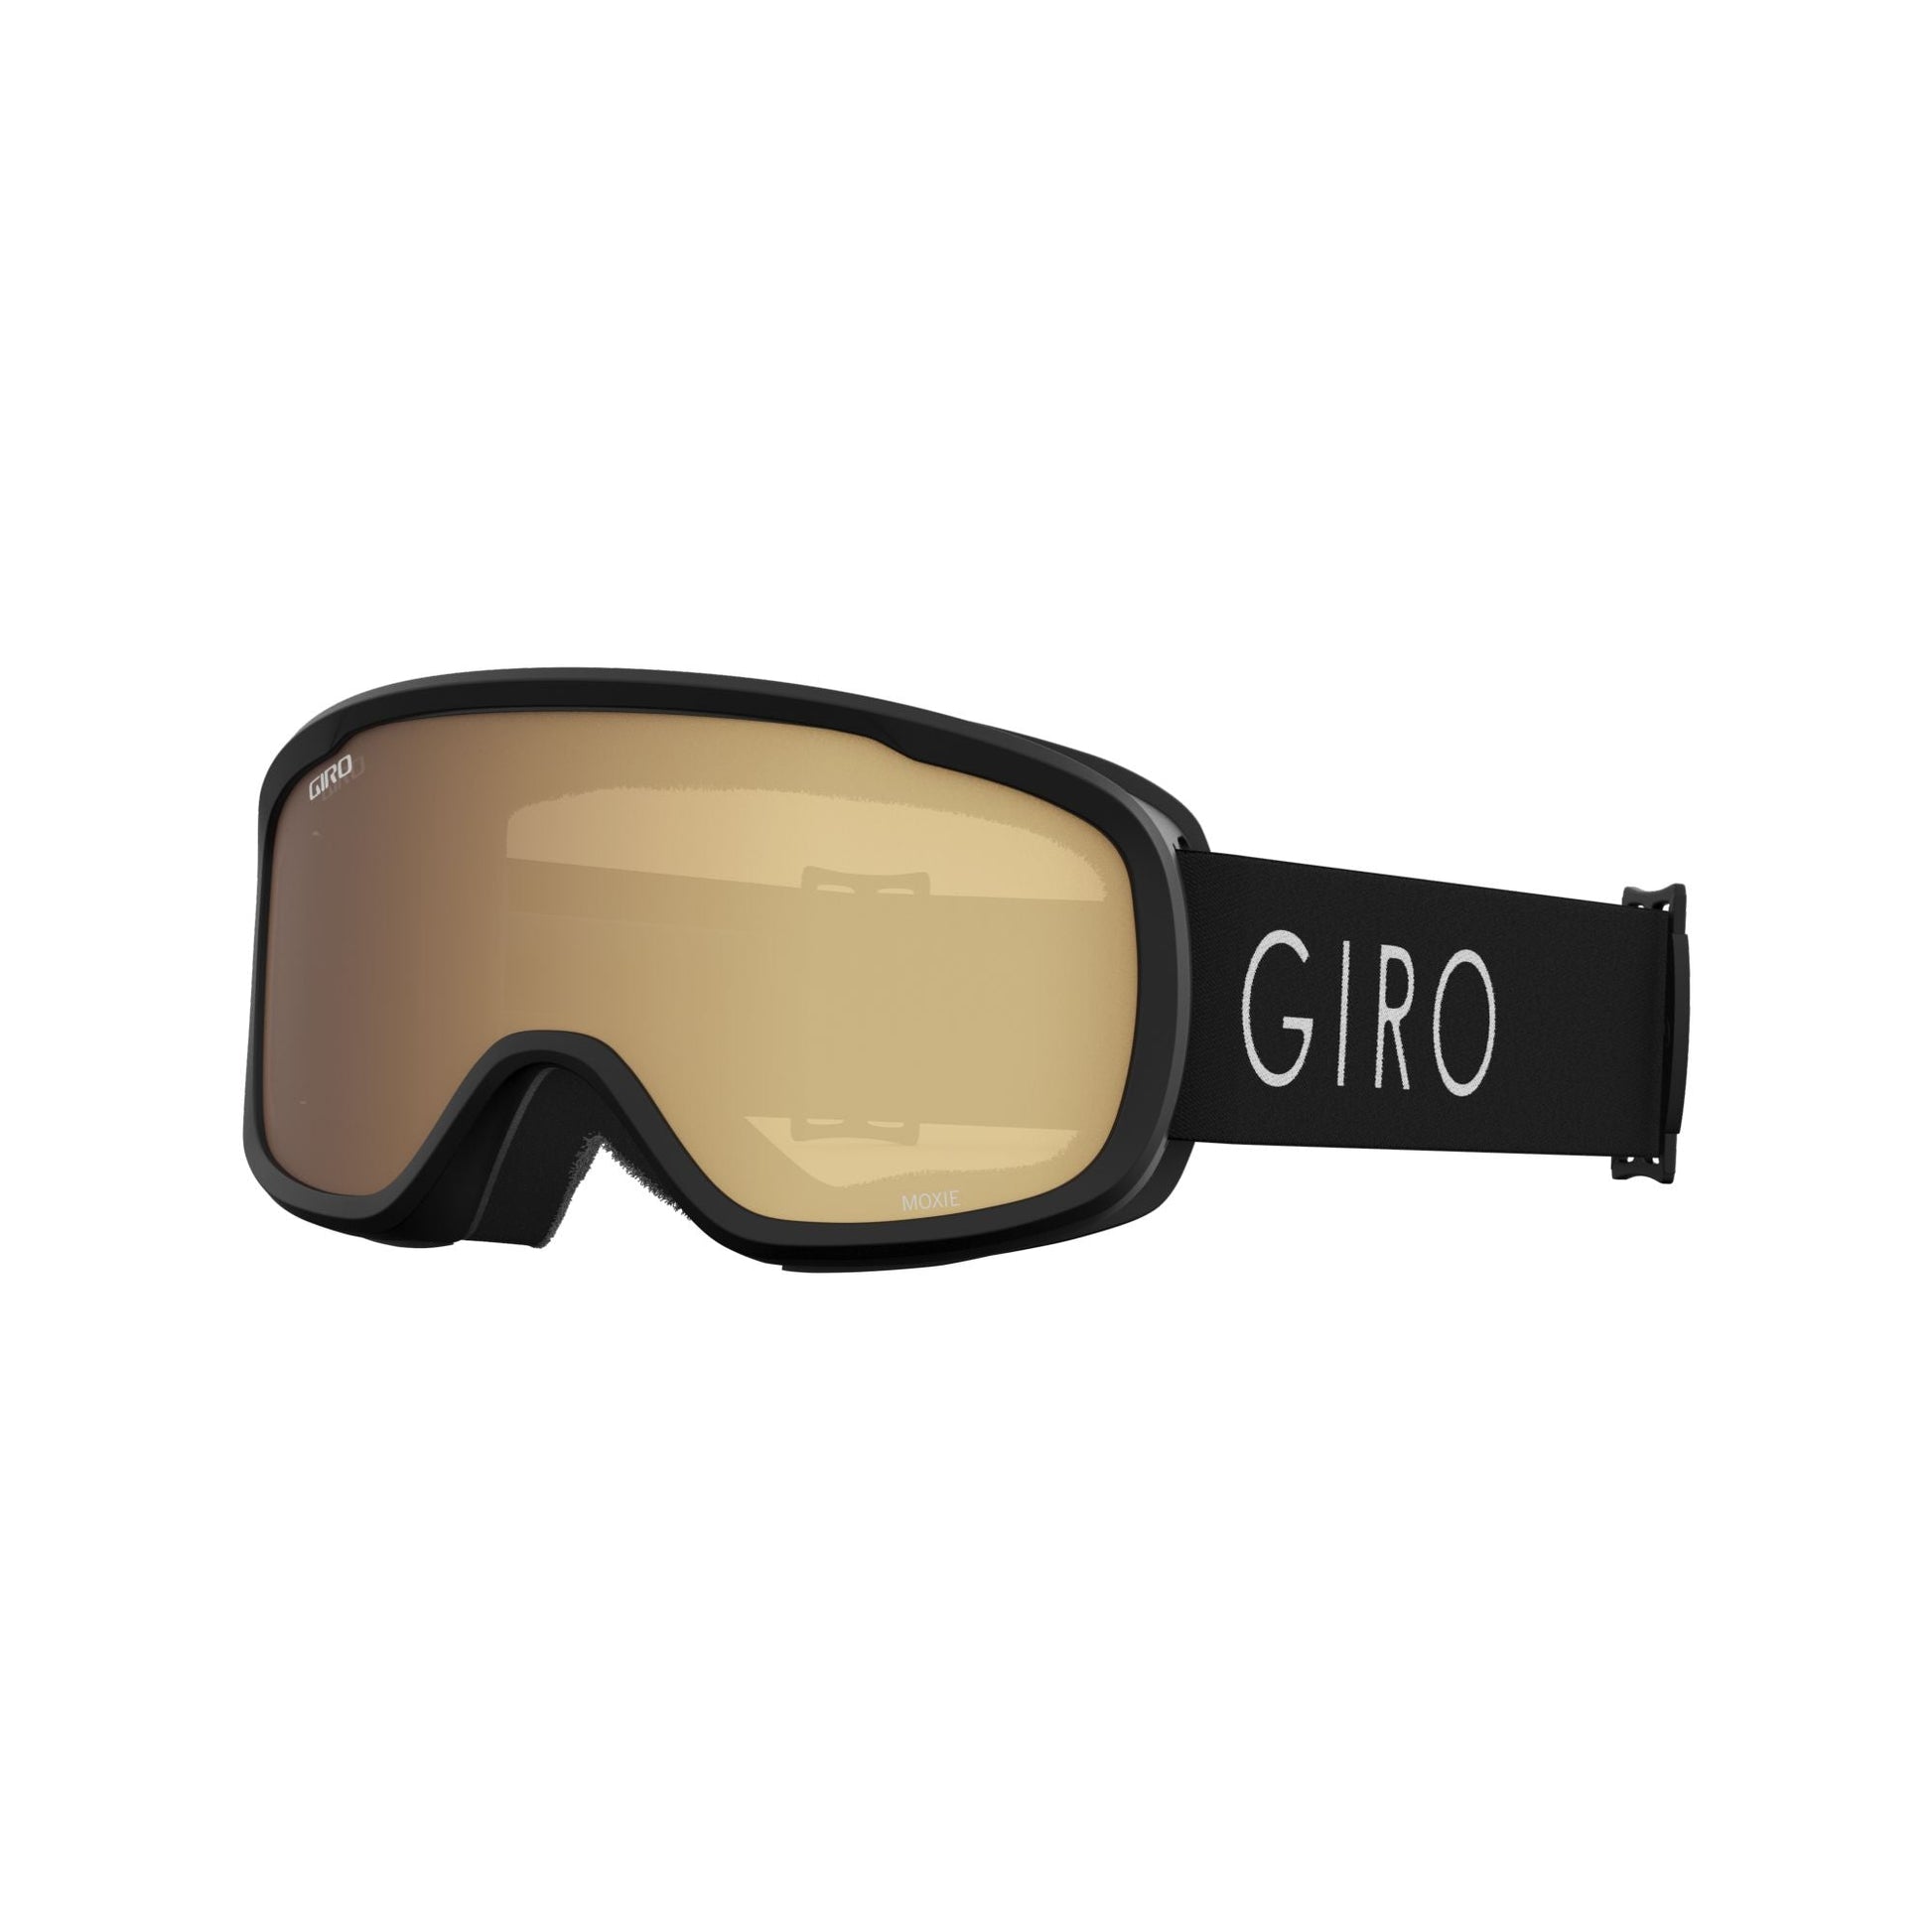 Giro Women's Moxie Snow Goggle - Openbox Black Core Light Amber Gold Yellow - Giro Snow Snow Goggles